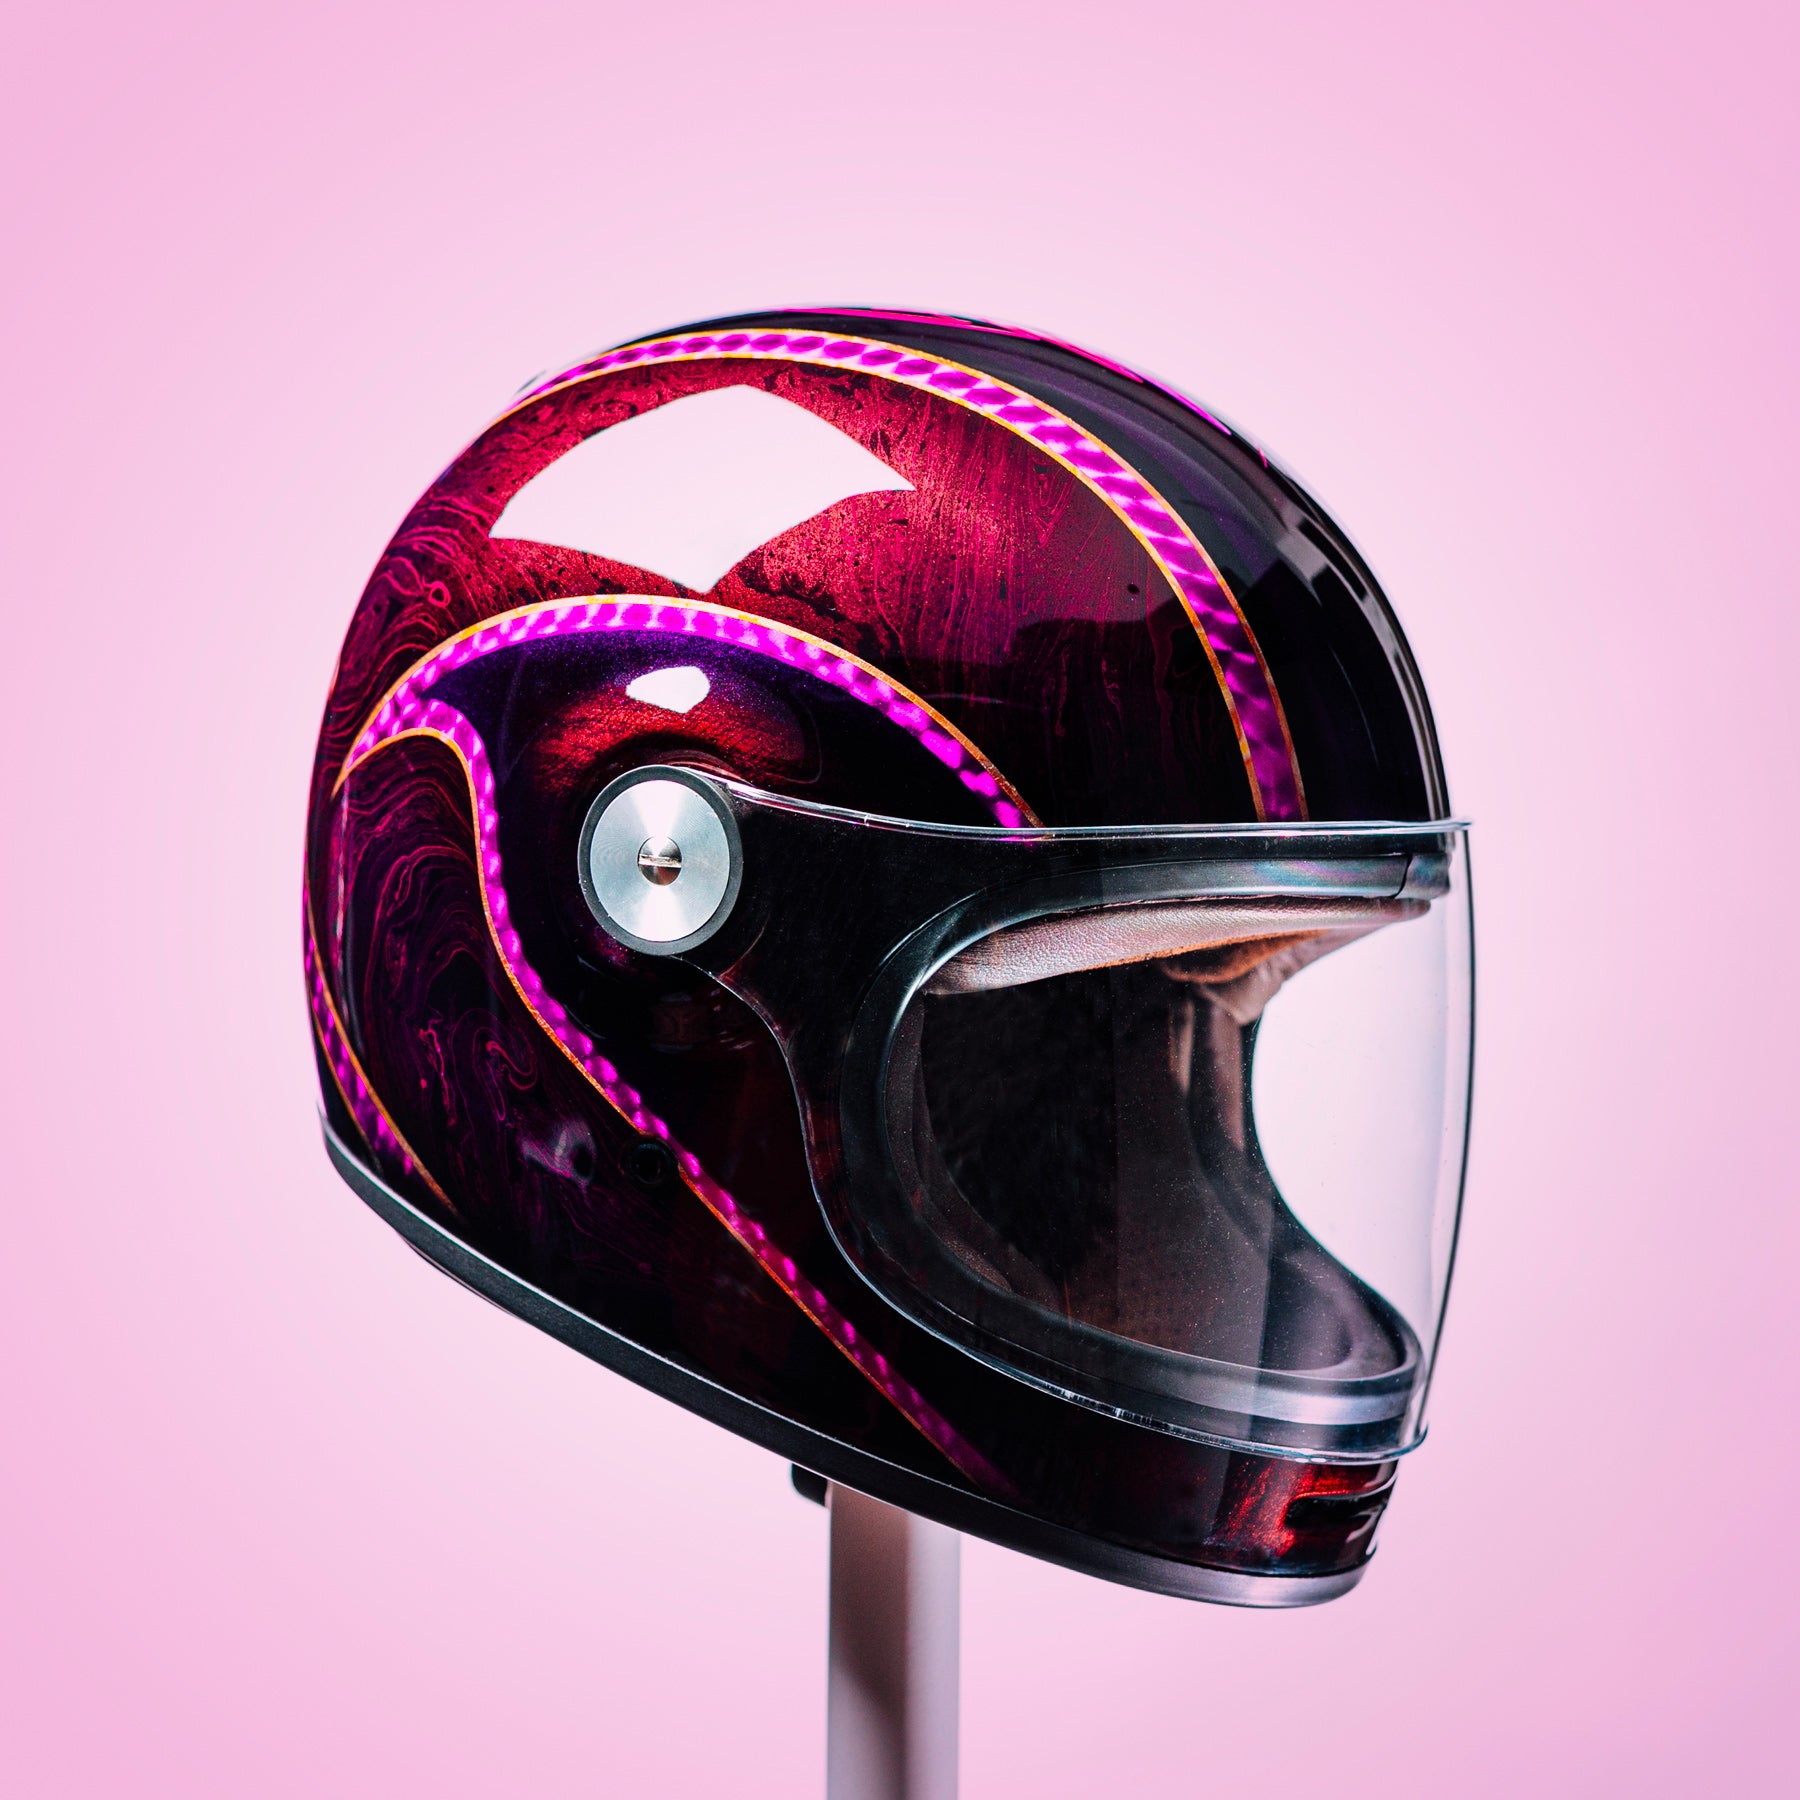 Trippy Ten helmet art show Pittsburgh Glory Daze motorcycle show Kurt Alexa Diserio Bell Helmets Seth Chaney